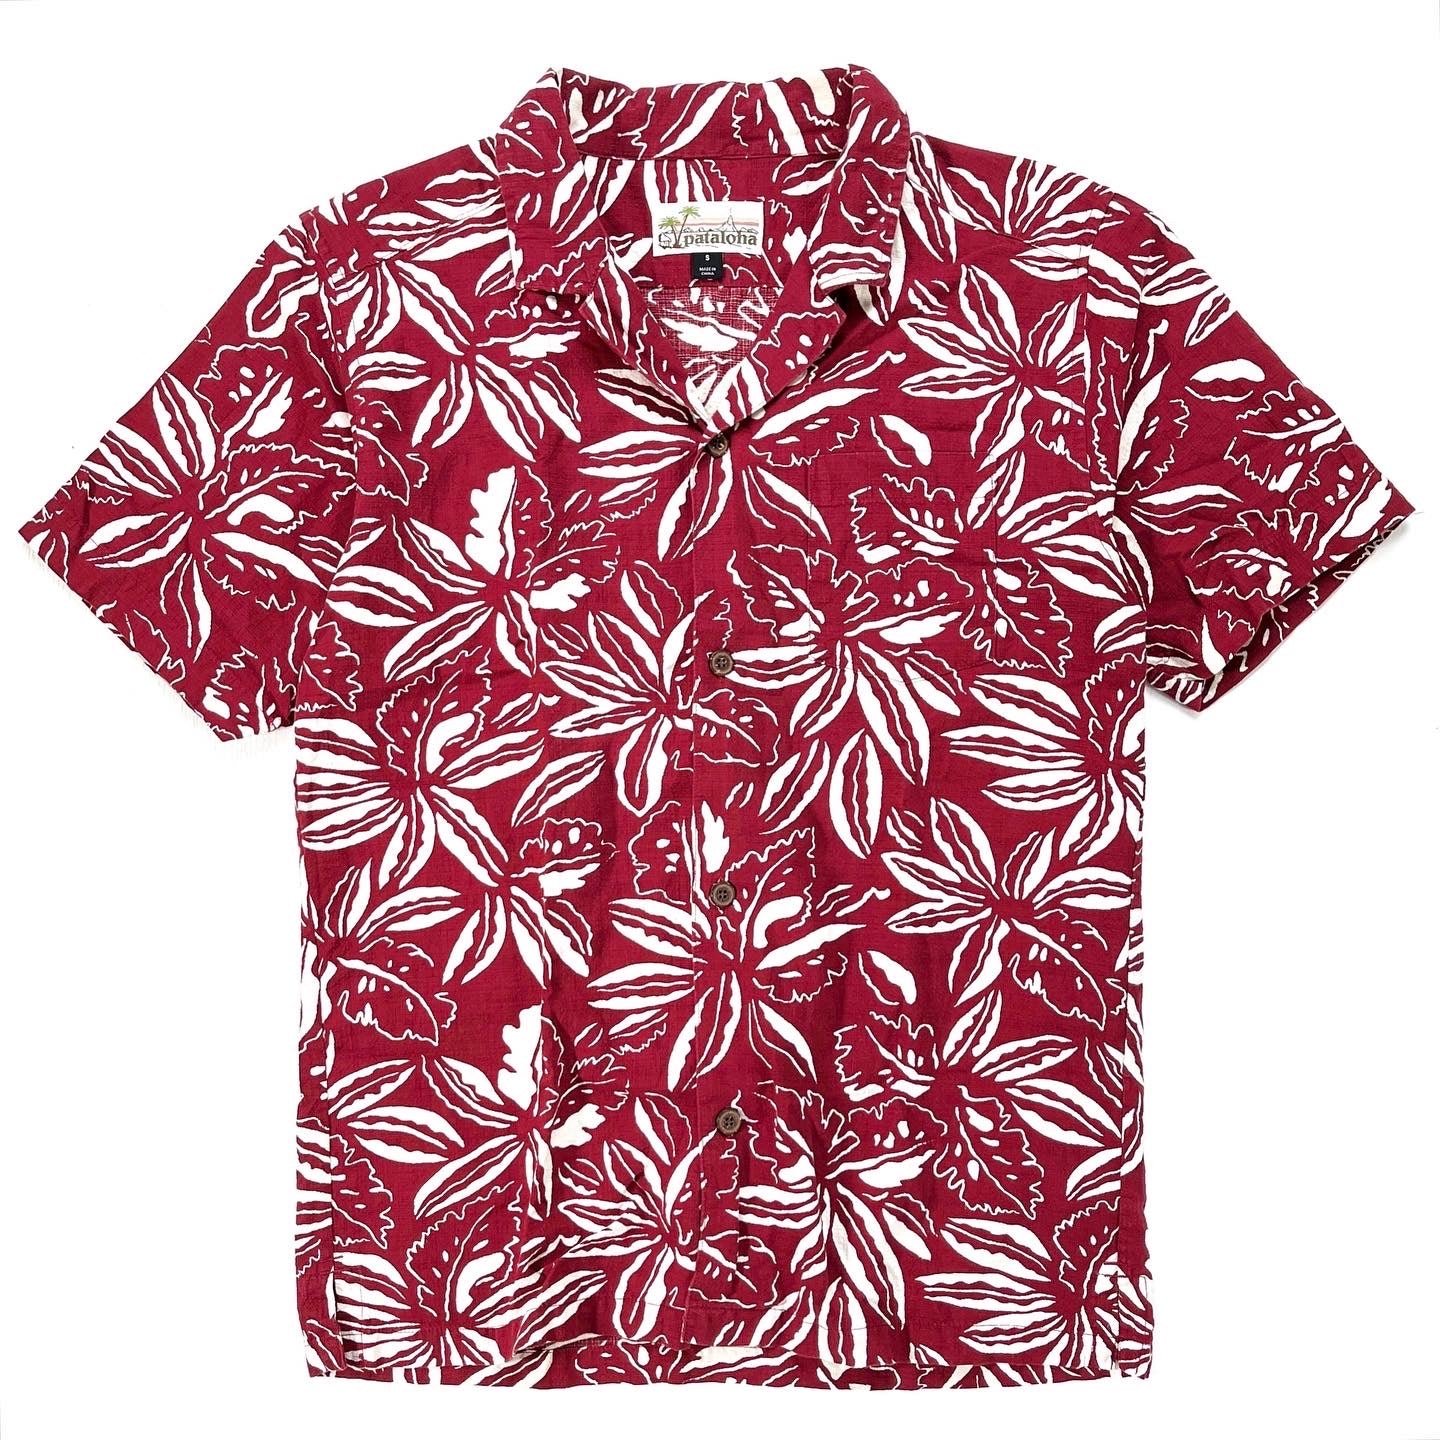 2016 Patagonia Mens Limited Edition Pataloha Shirt, Tropical (S)